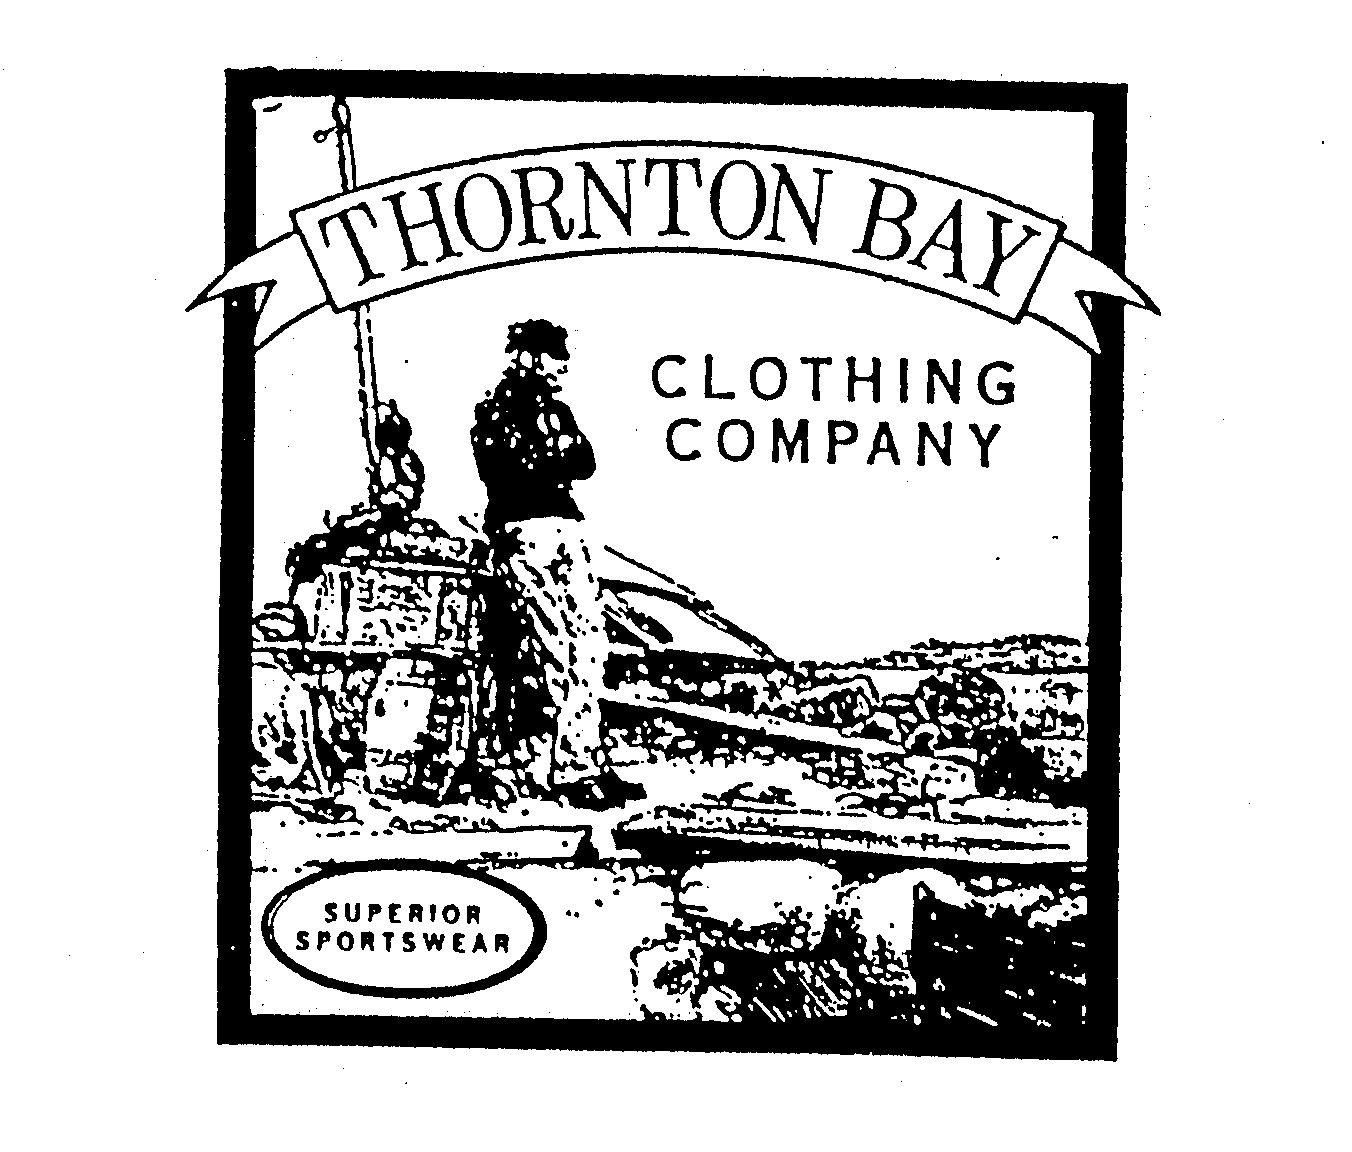  THORNTON BAY CLOTHING COMPANY SUPERIOR SPORTSWEAR